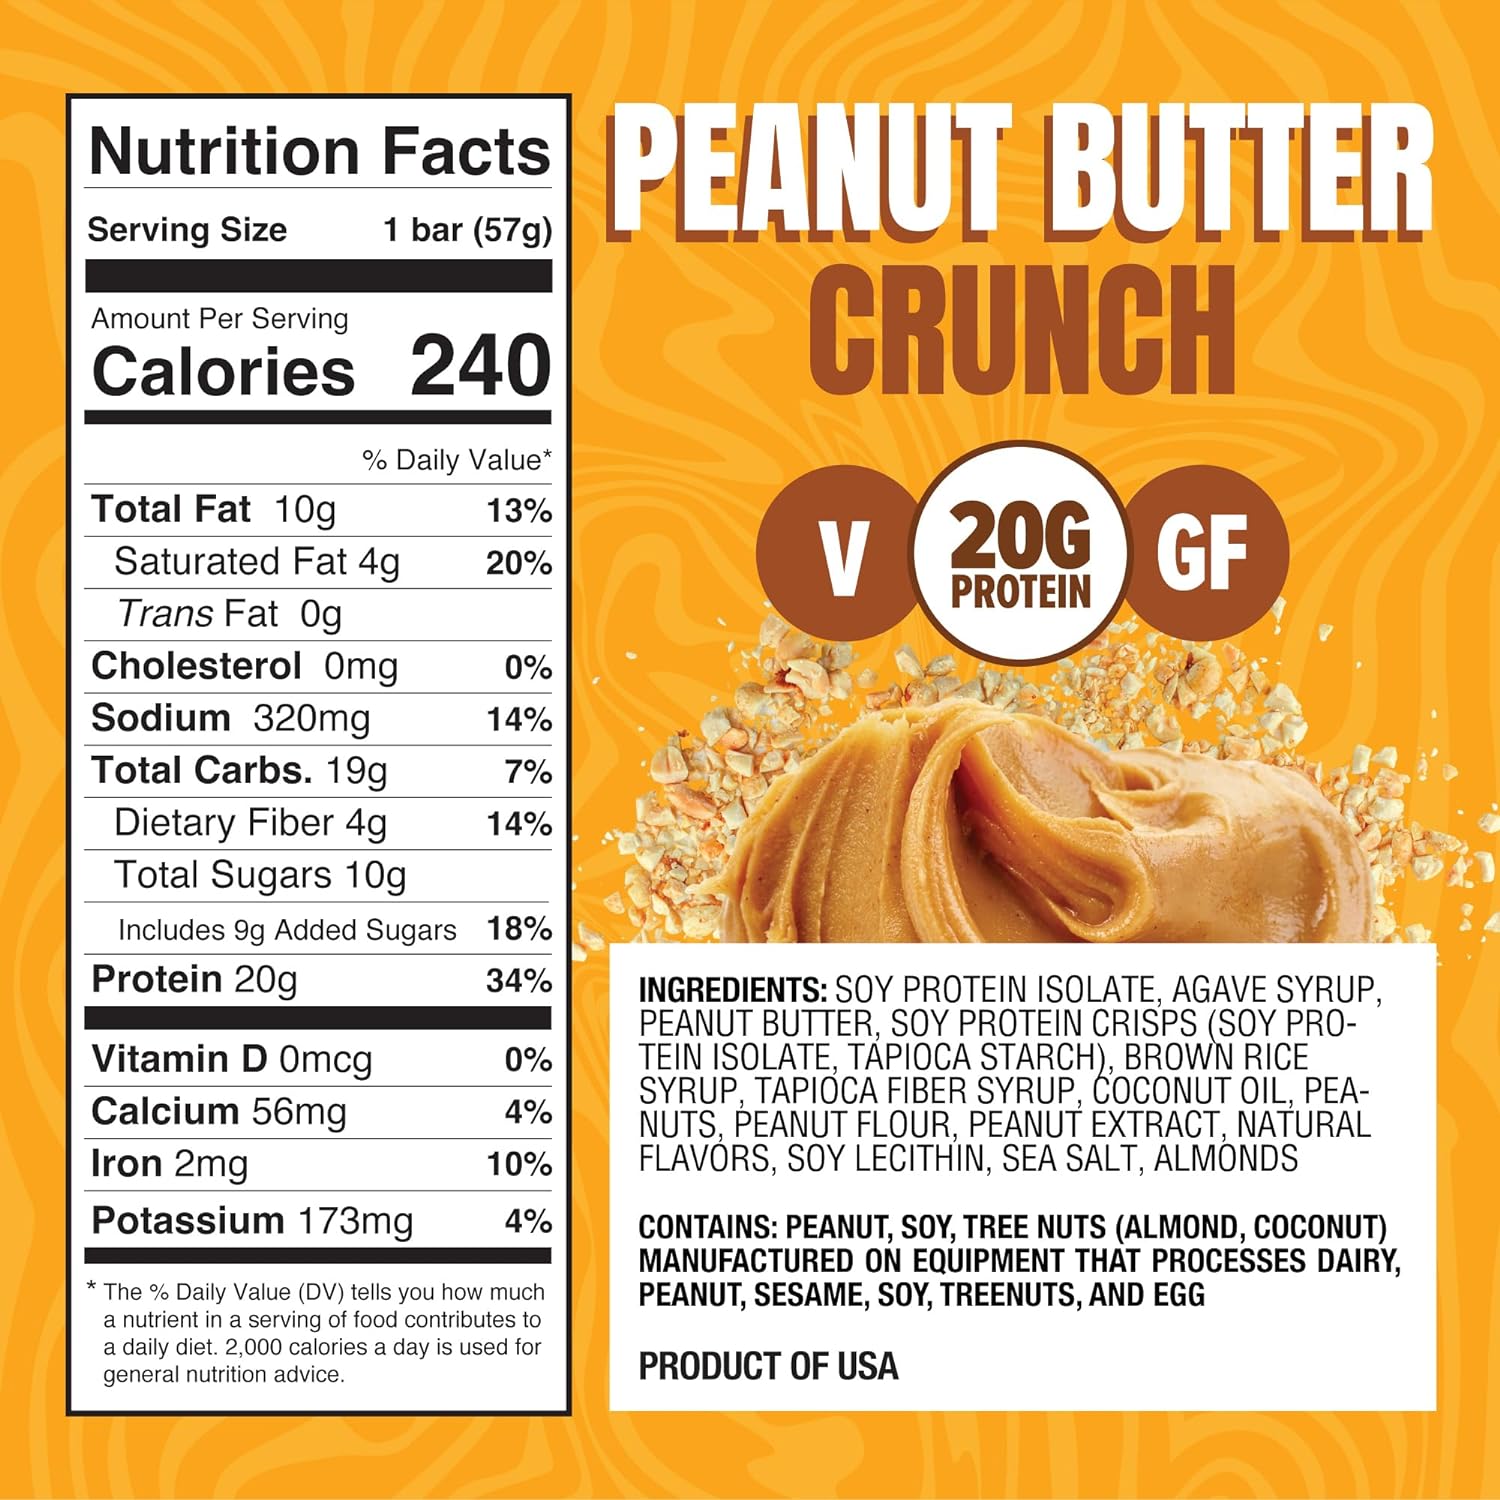 Peanut Butter Crunch Box of 16 Bars